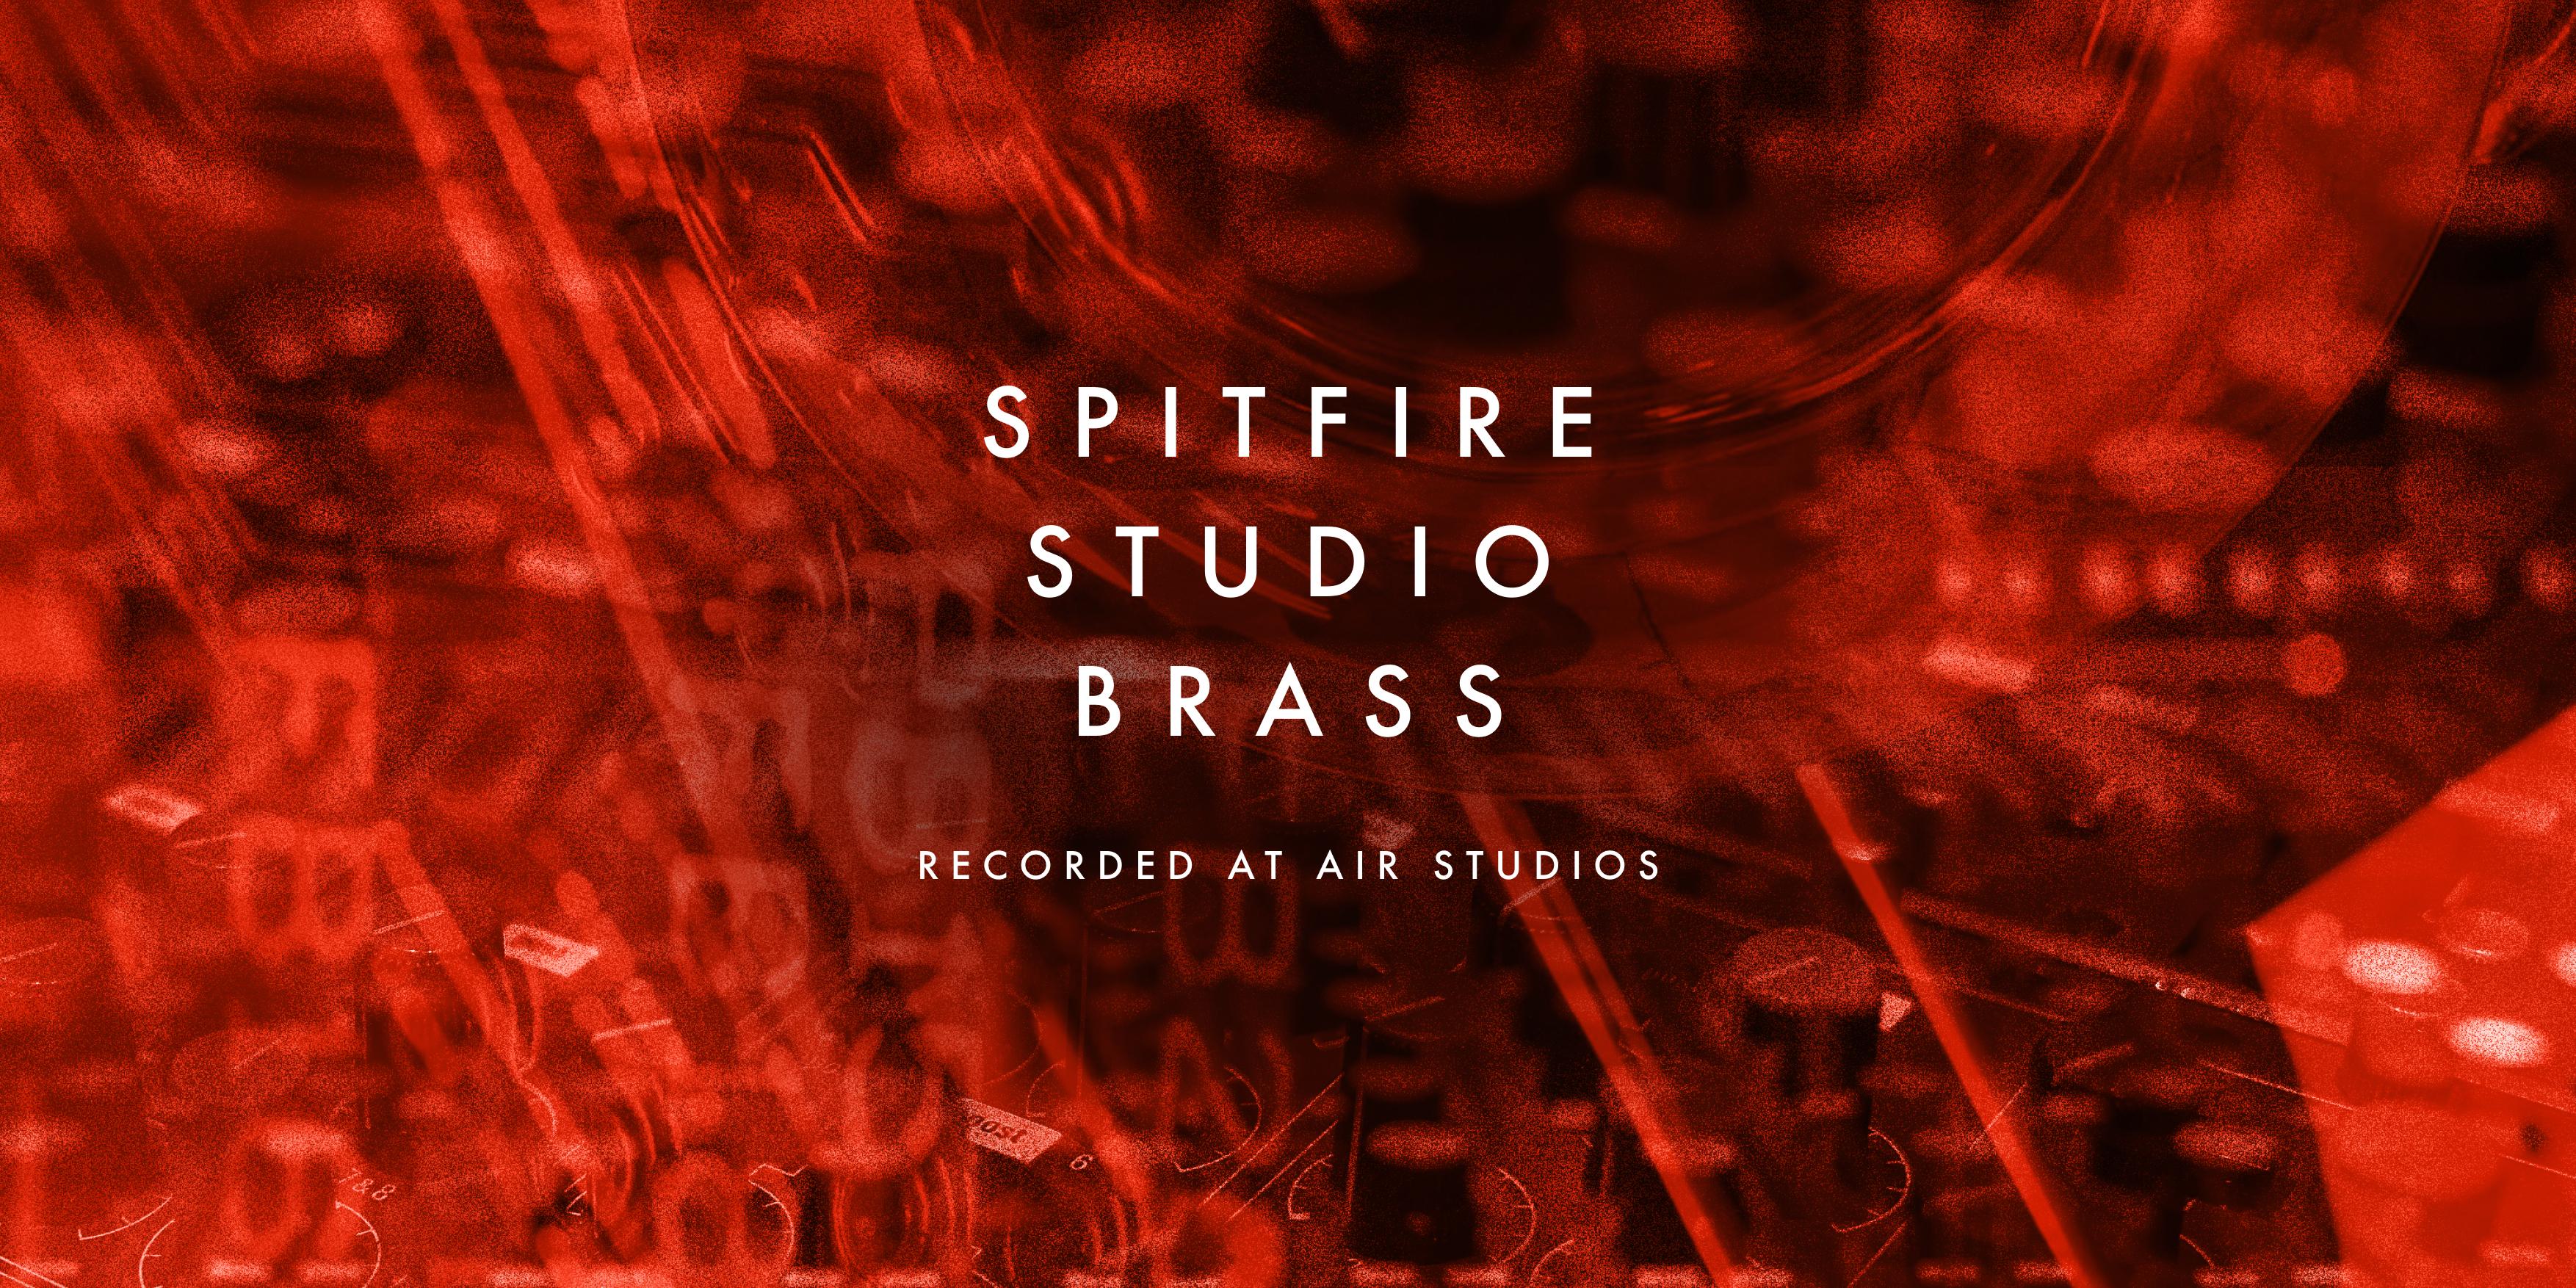 Spitfire Studio Brass